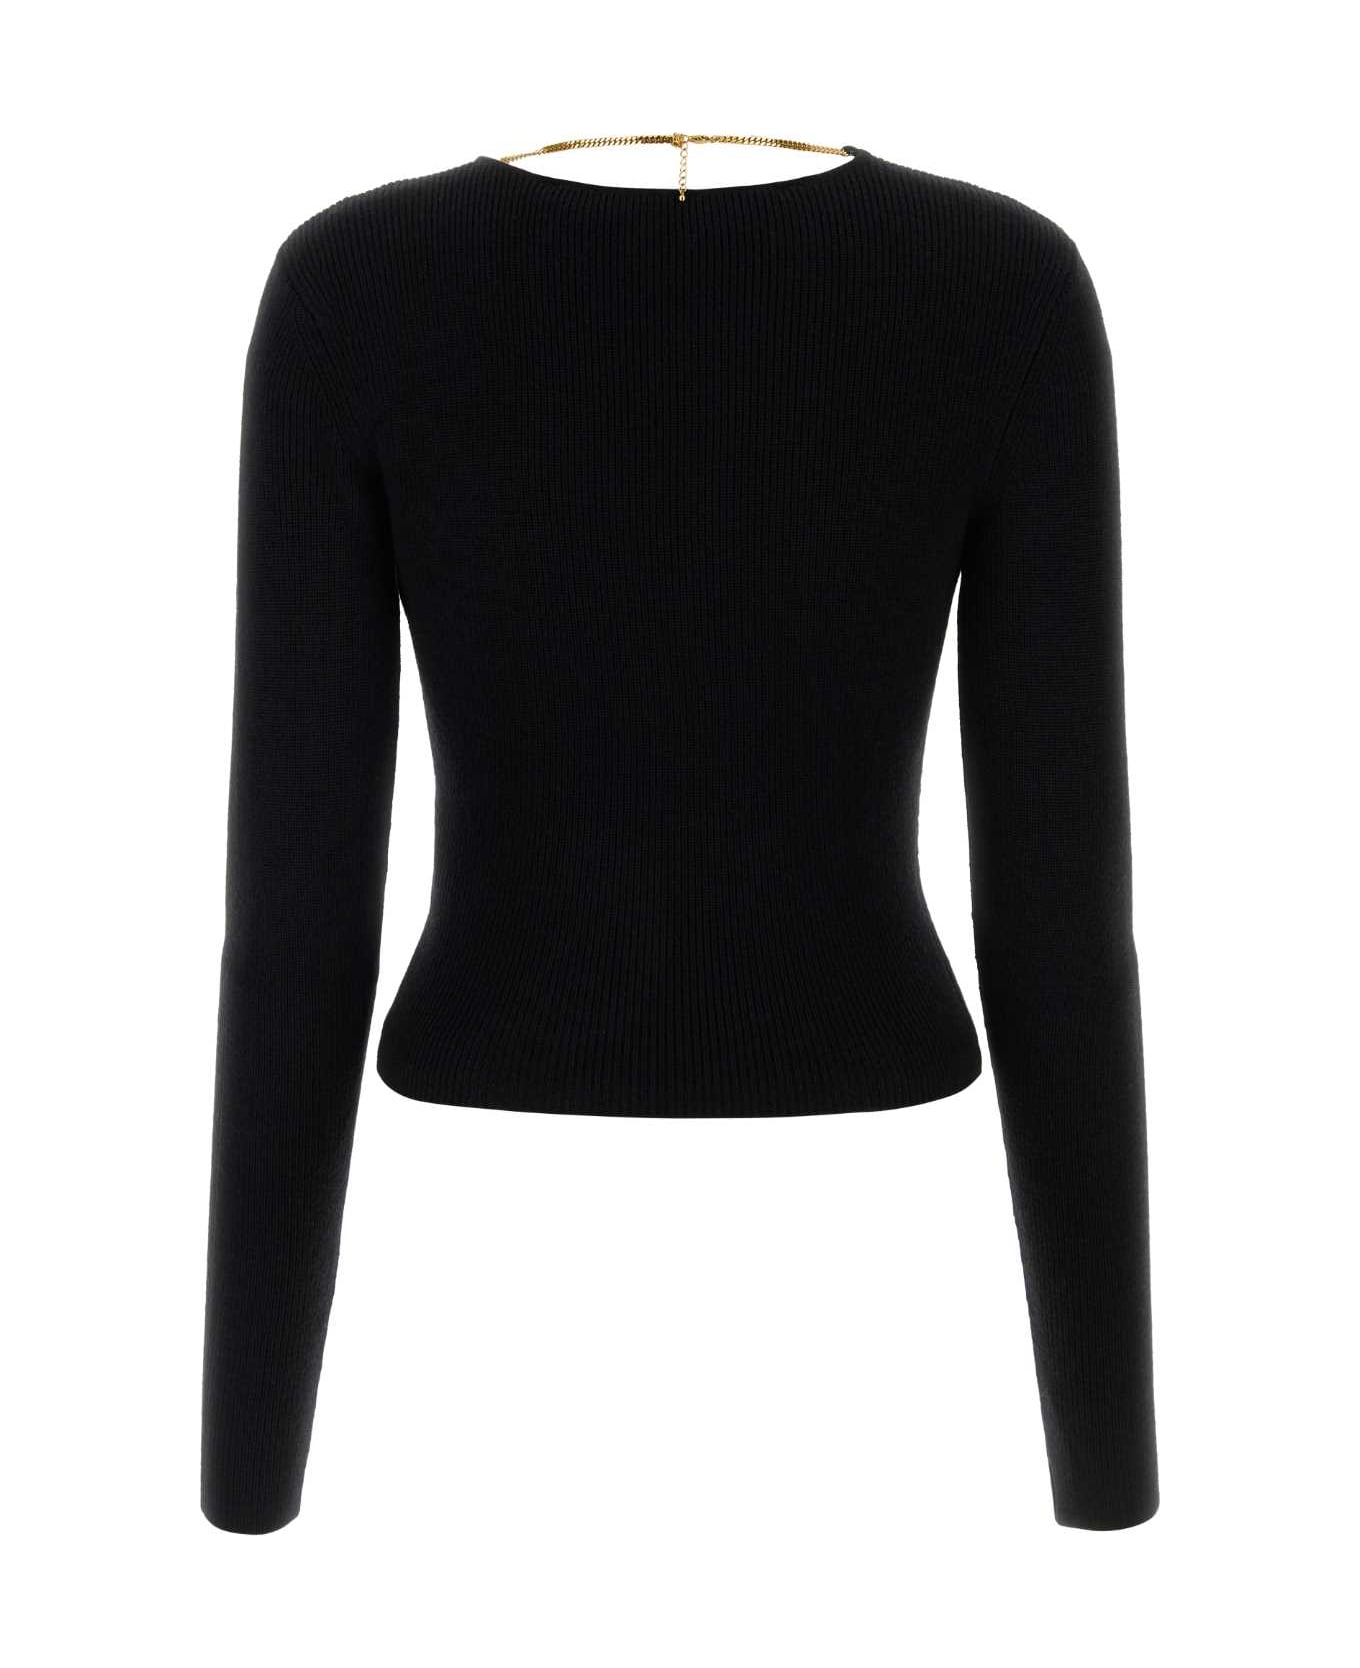 Alexander Wang Black Stretch Wool Blend Sweater - BLACK